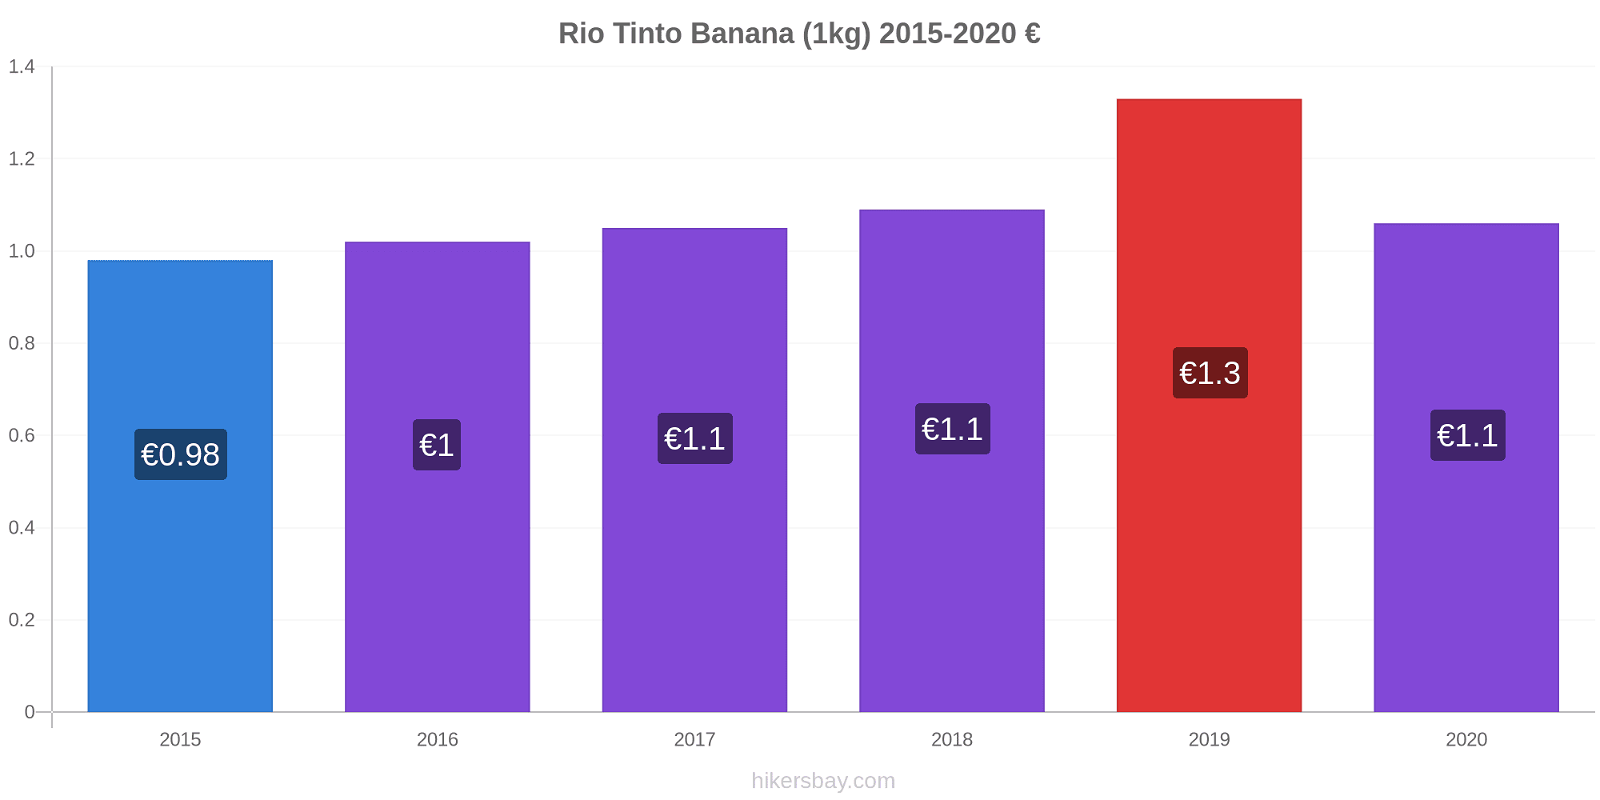 Rio Tinto modificări de preț Banana (1kg) hikersbay.com